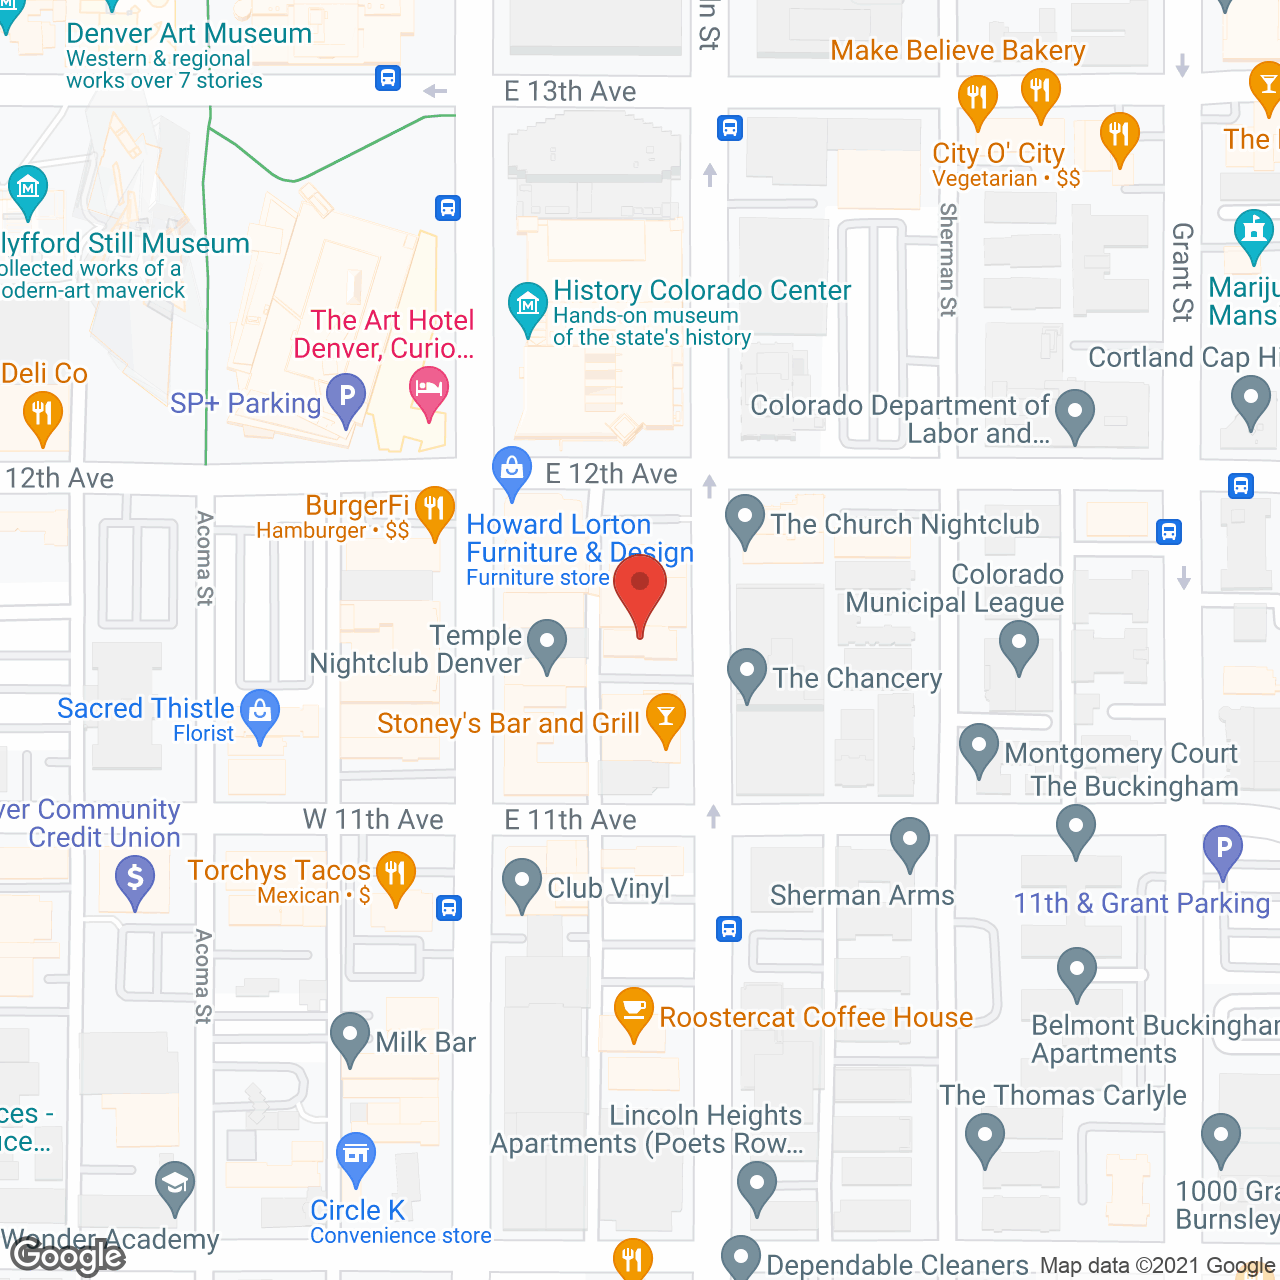 Third Way Ctr in google map